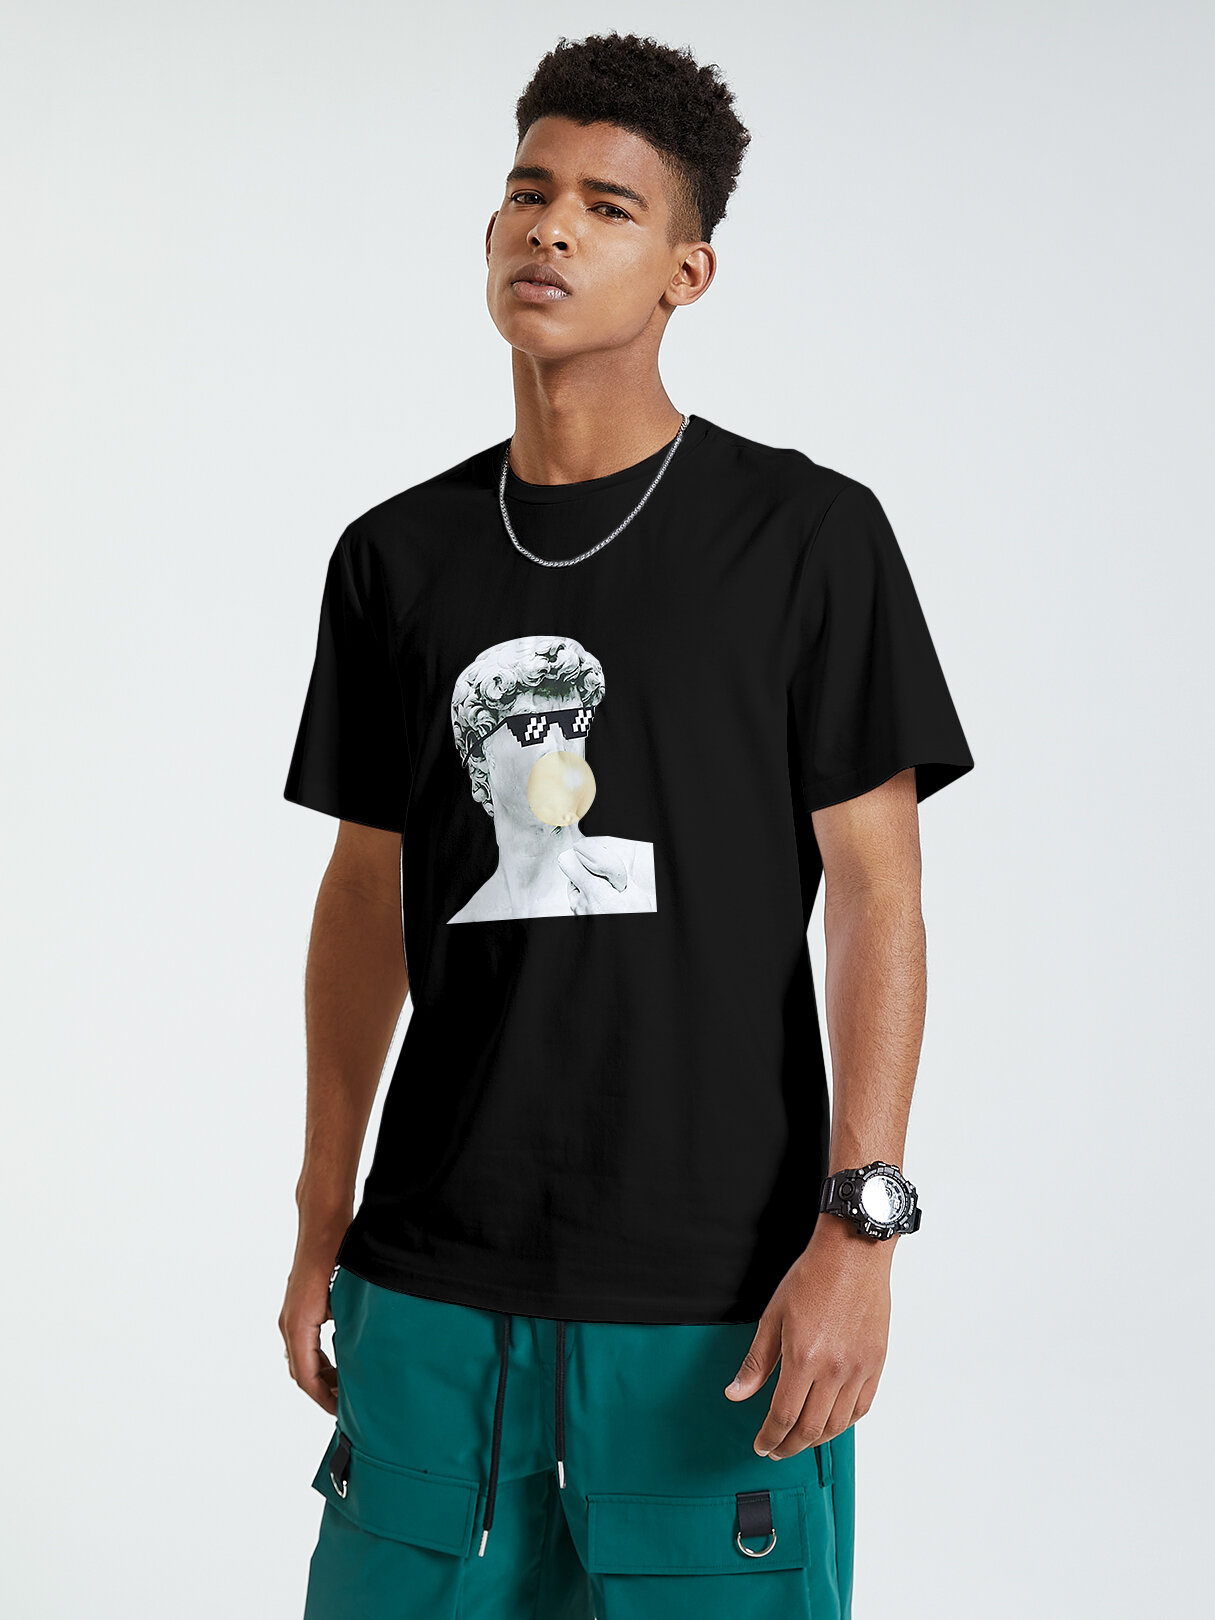 

KOYYE Men Casual Graphic Figure Print T-Shirt, Black;white